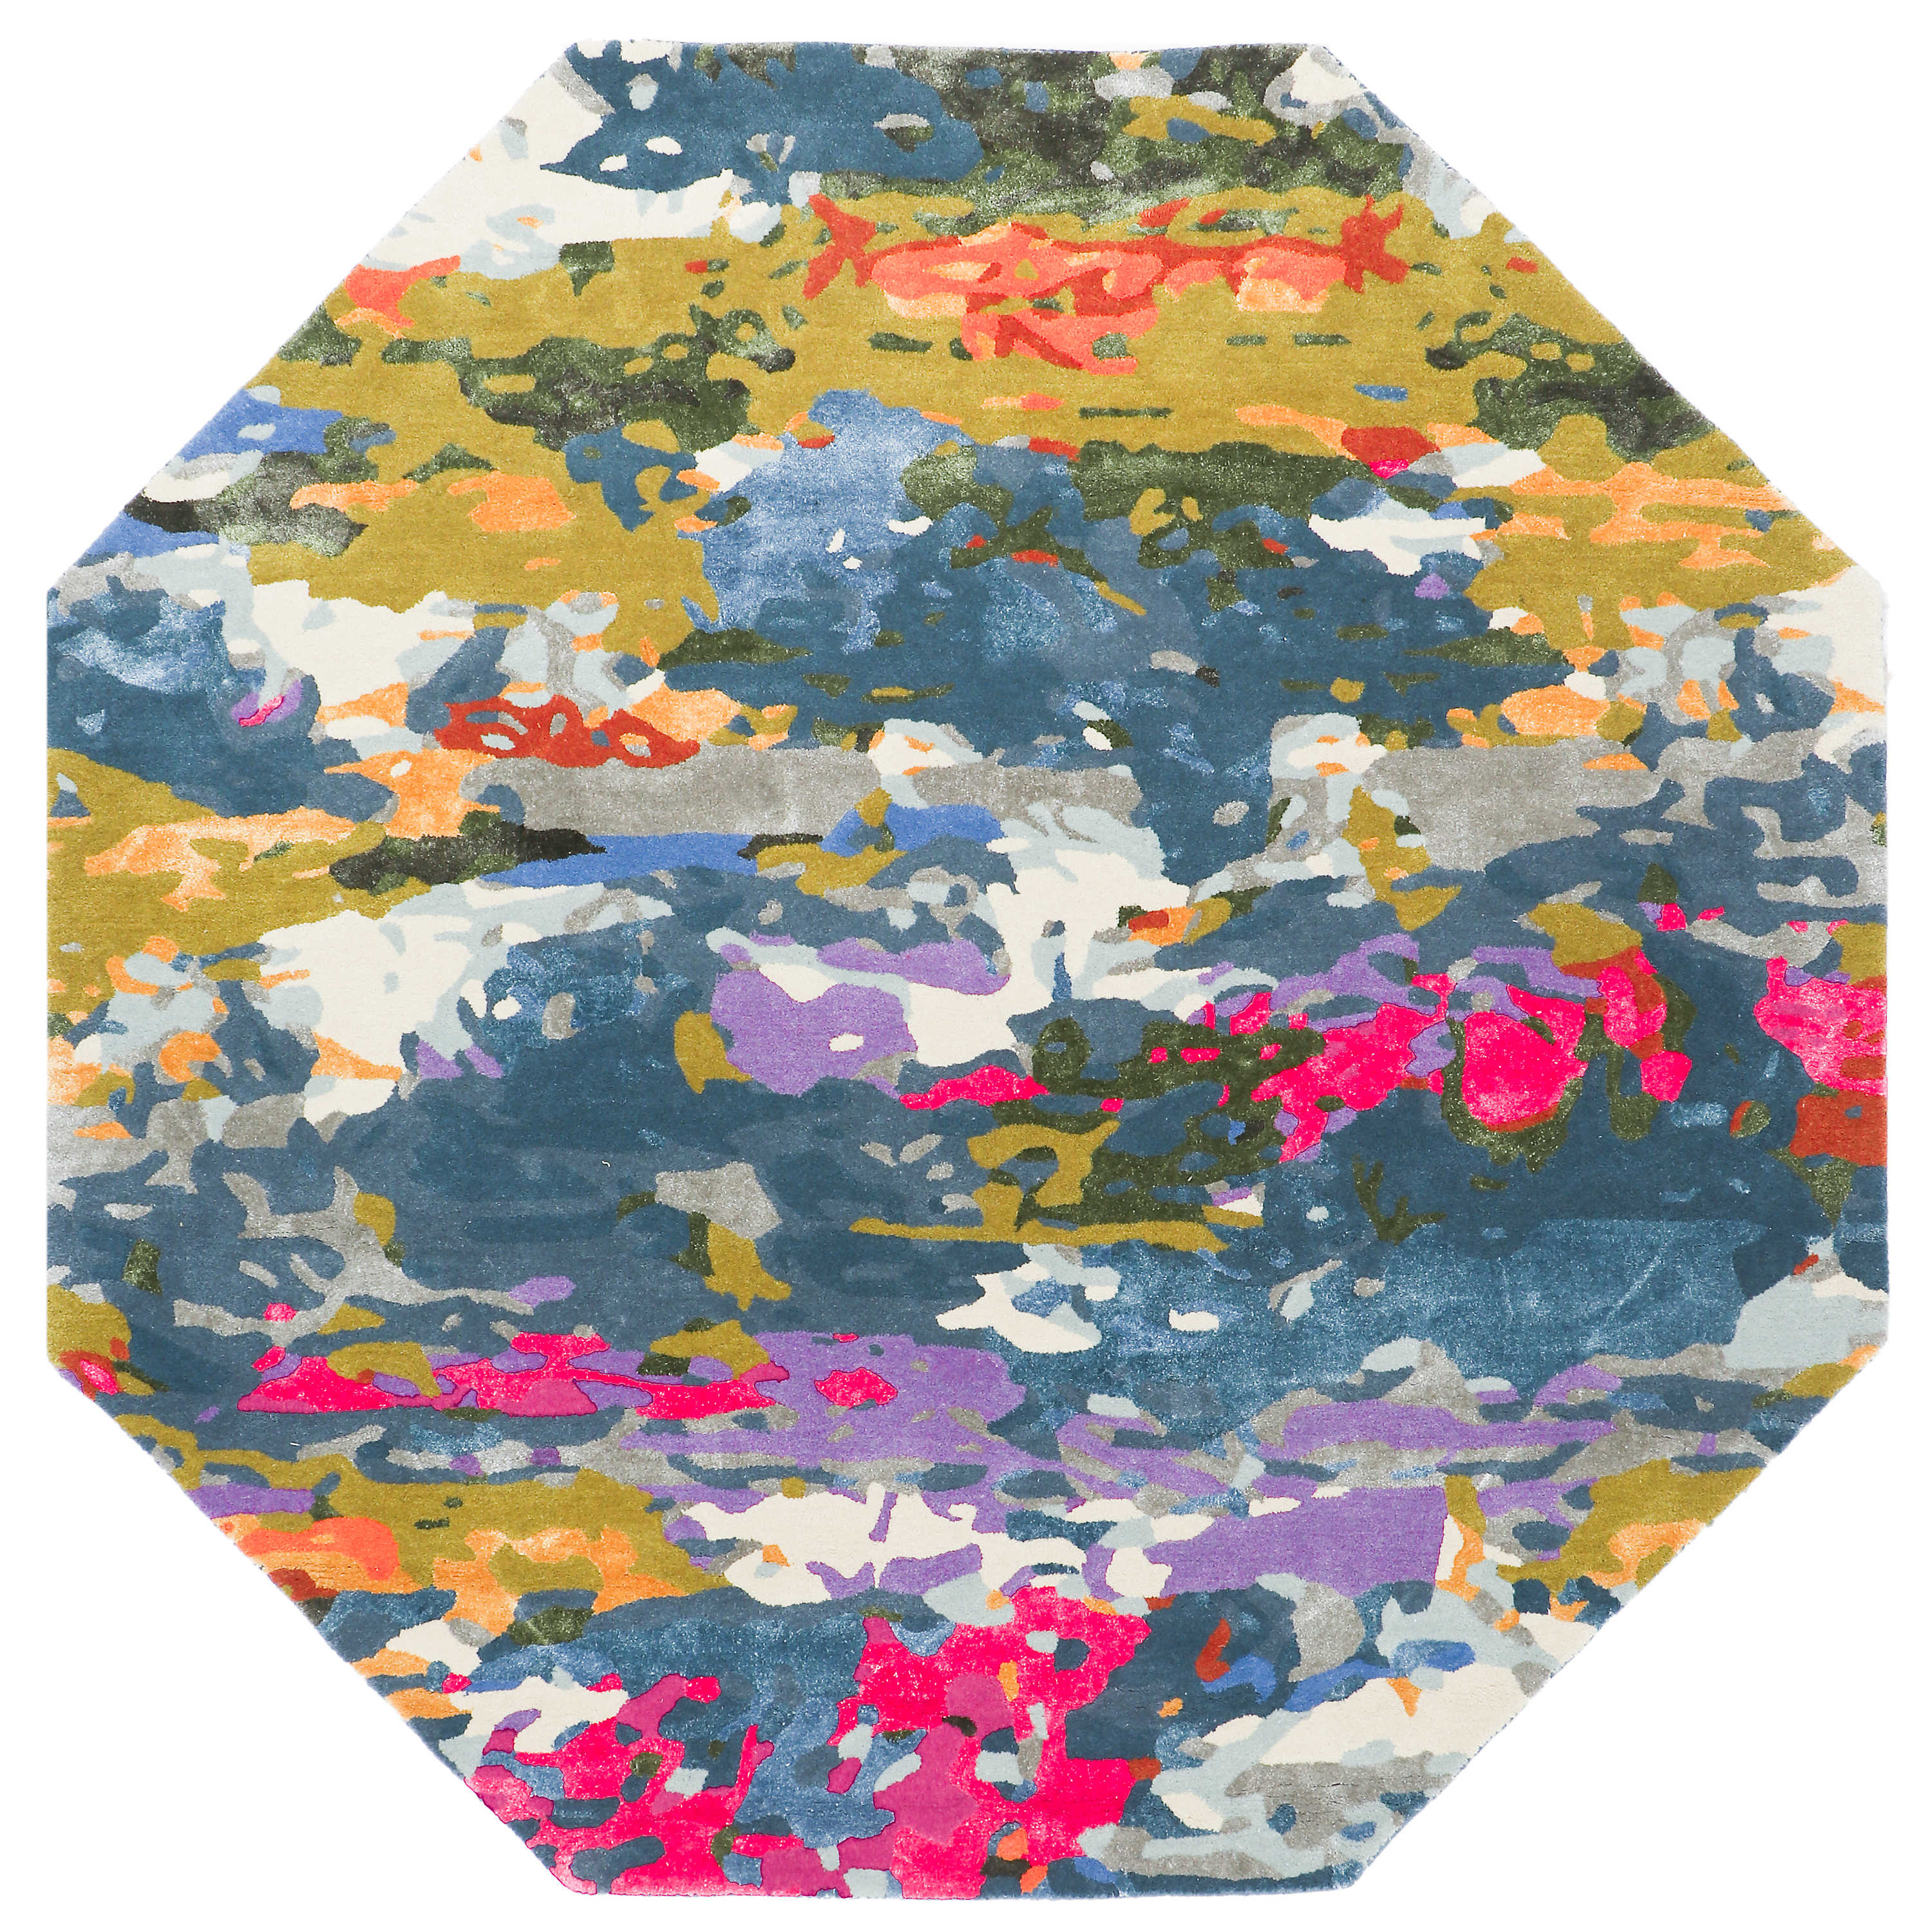 Mosaic Abstract 6' Octagon Rug mackenzie-childs Panama 0